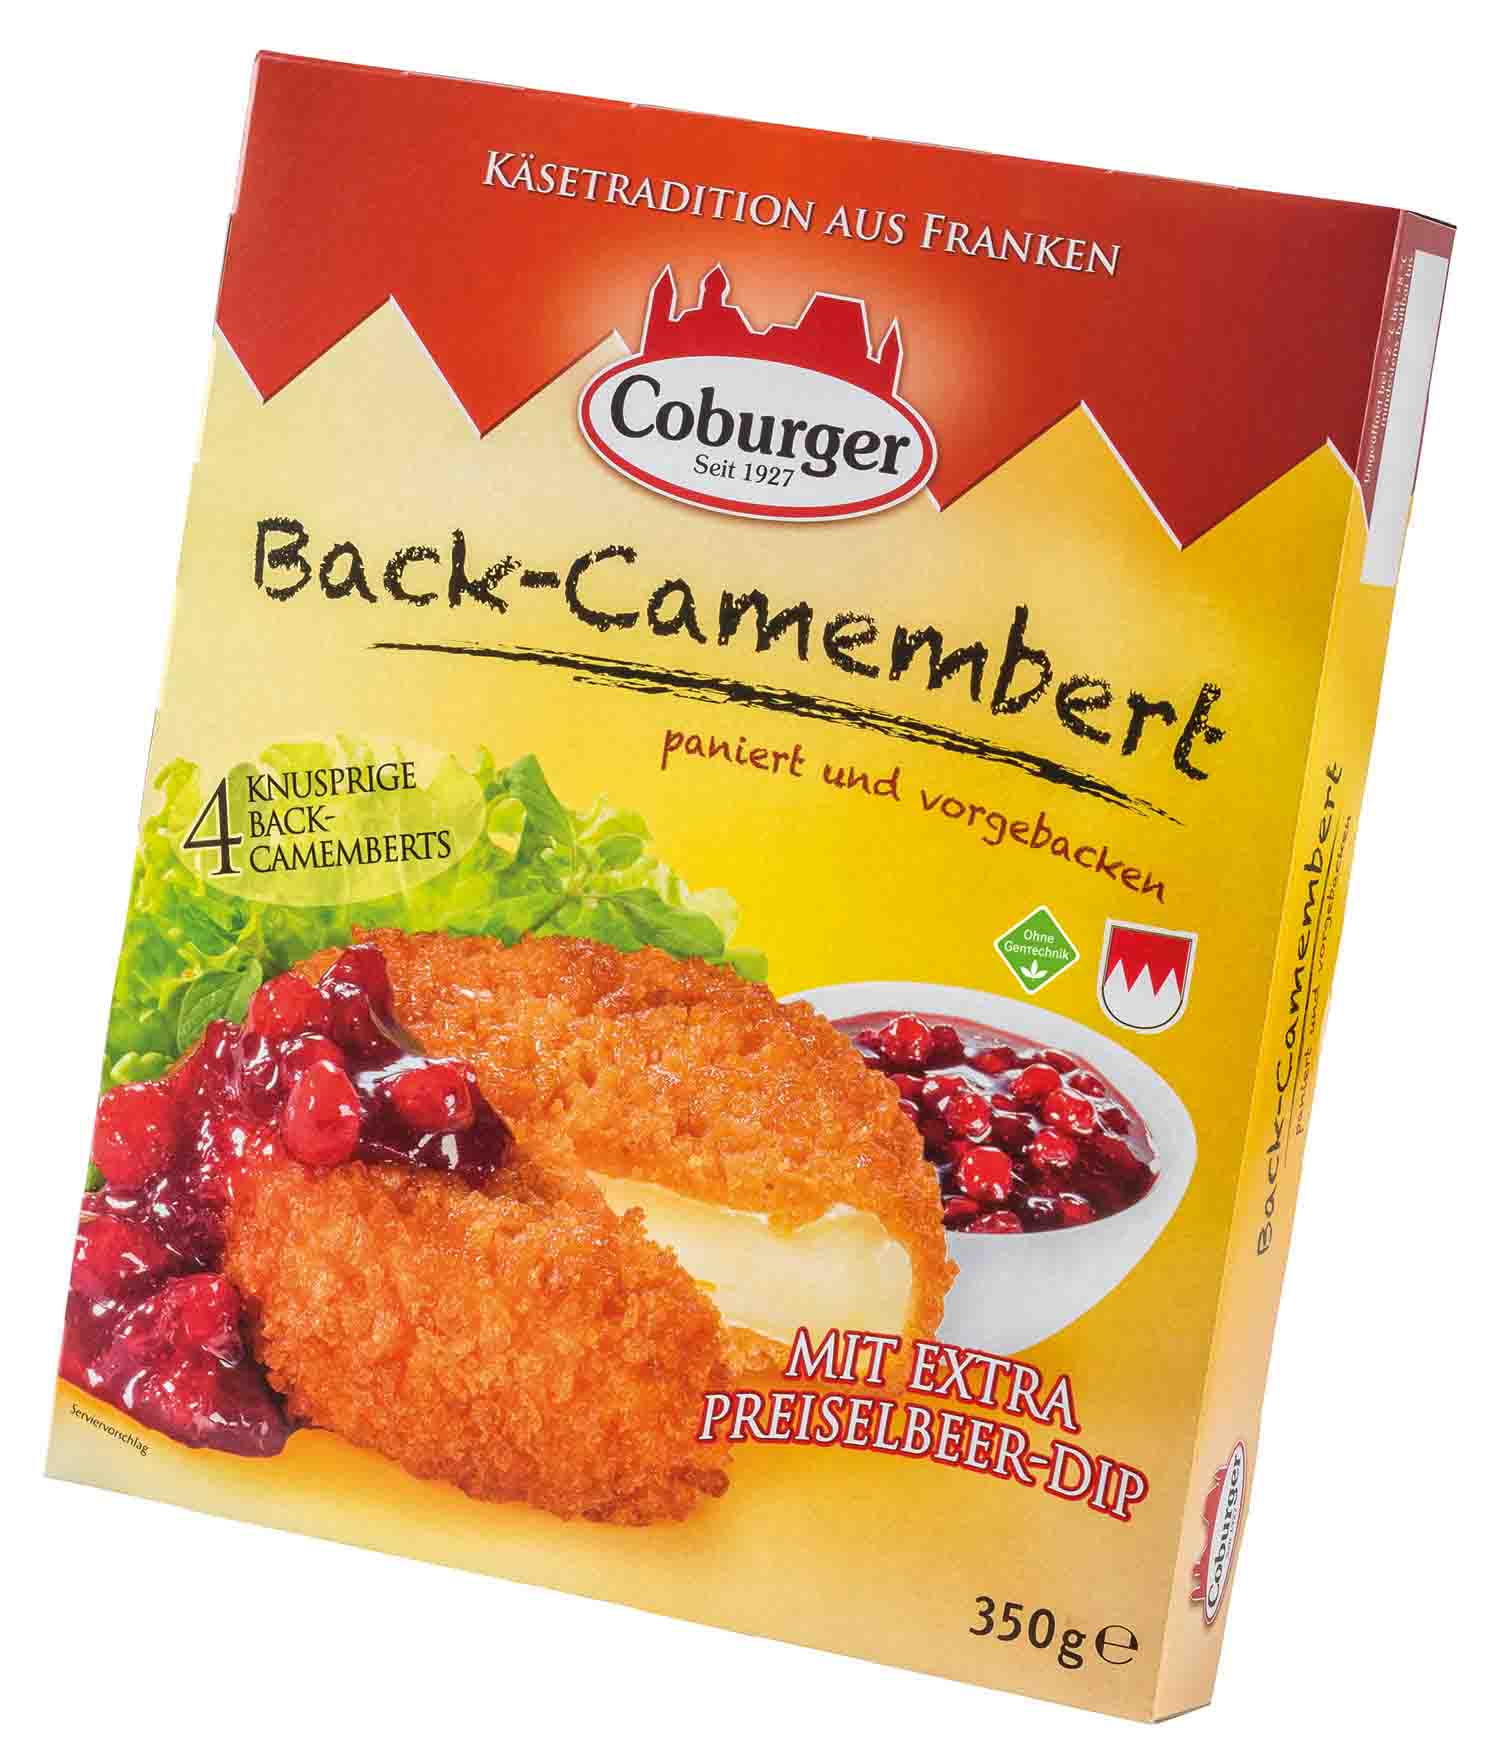 Coburger Oberfranken Milchwerke dip with Back-Camembert 350g - cranberry West